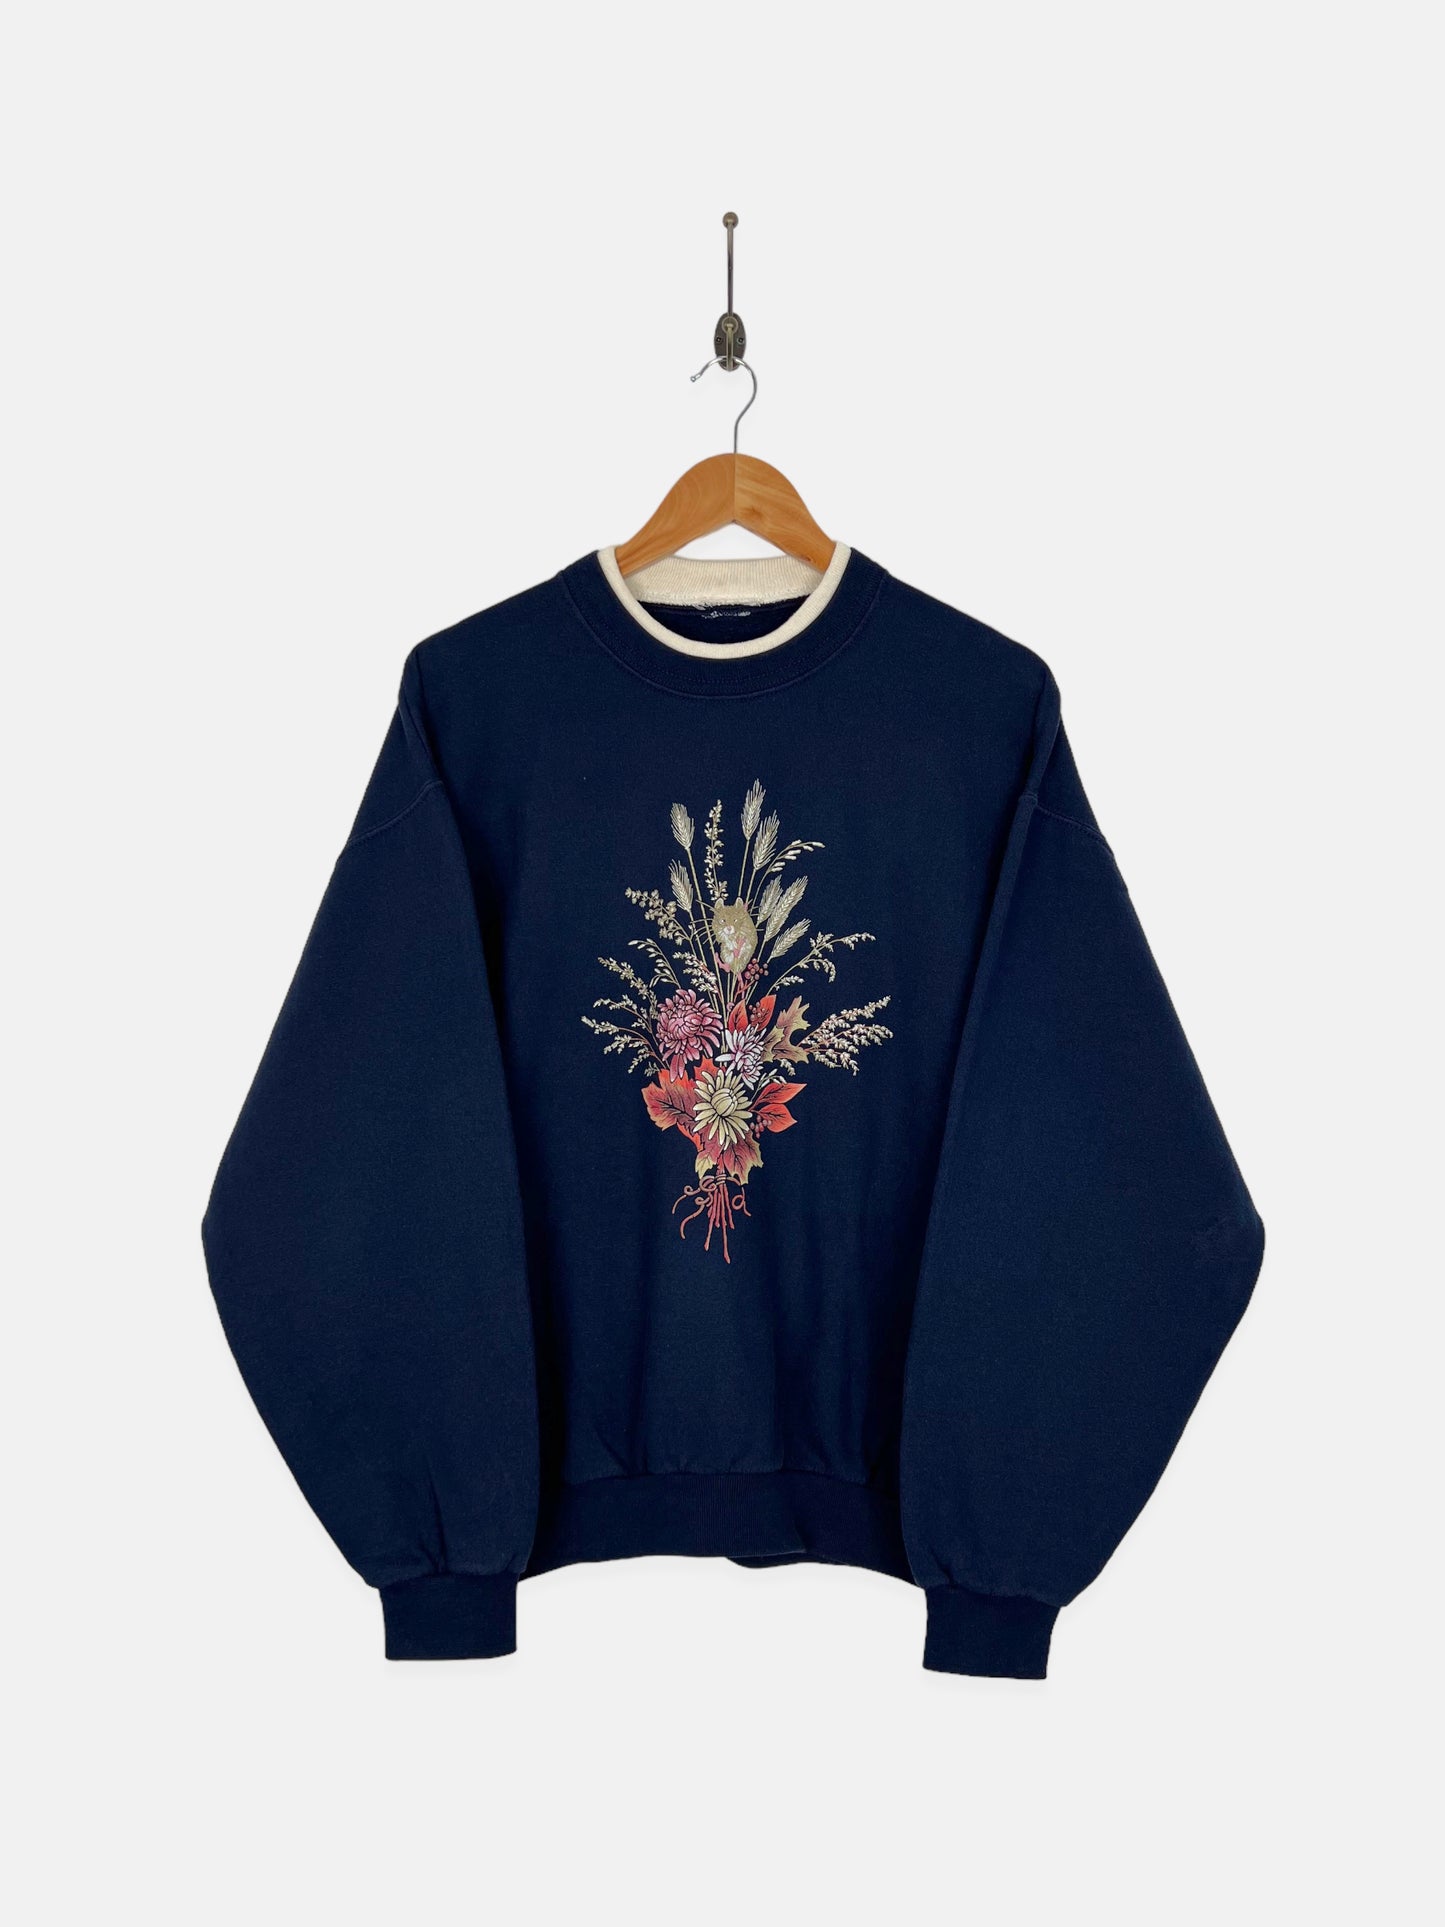 90's Flowers Vintage Sweatshirt Size M